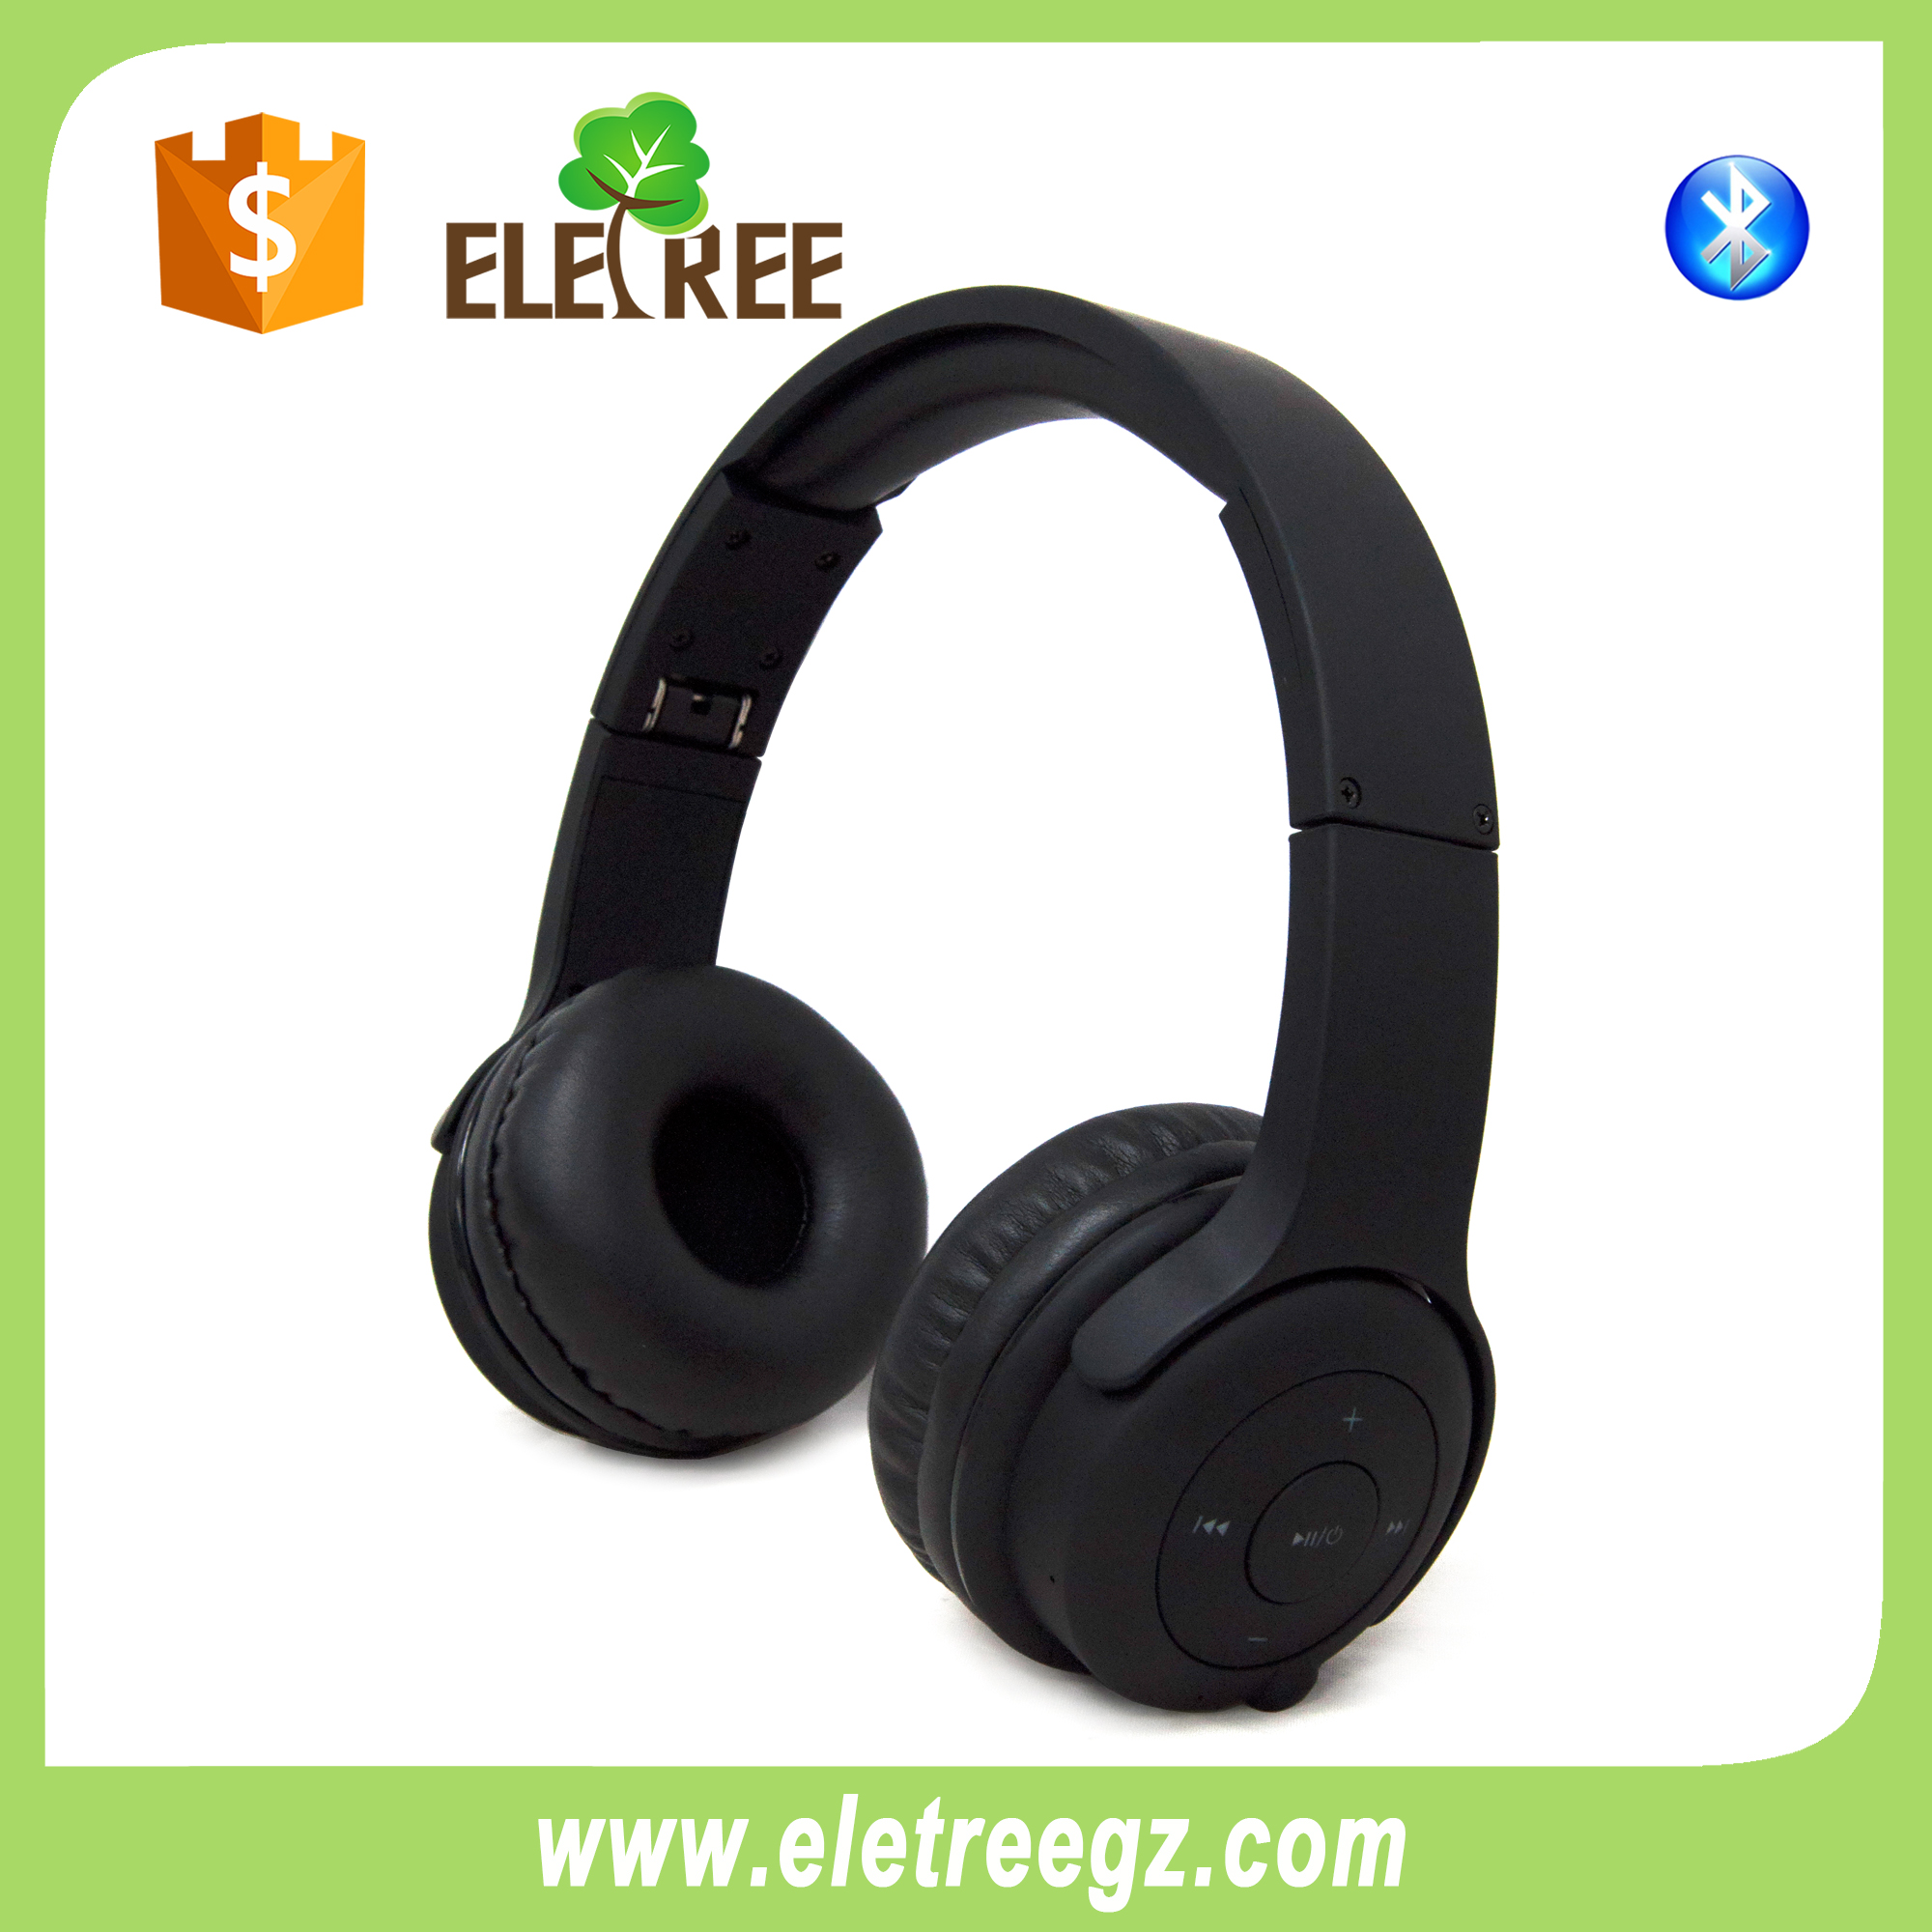 2 IN 1 handsfree bluetooth Speaker, Promotional gift CSR 4.0 wireless headphones made-in-china BT-109